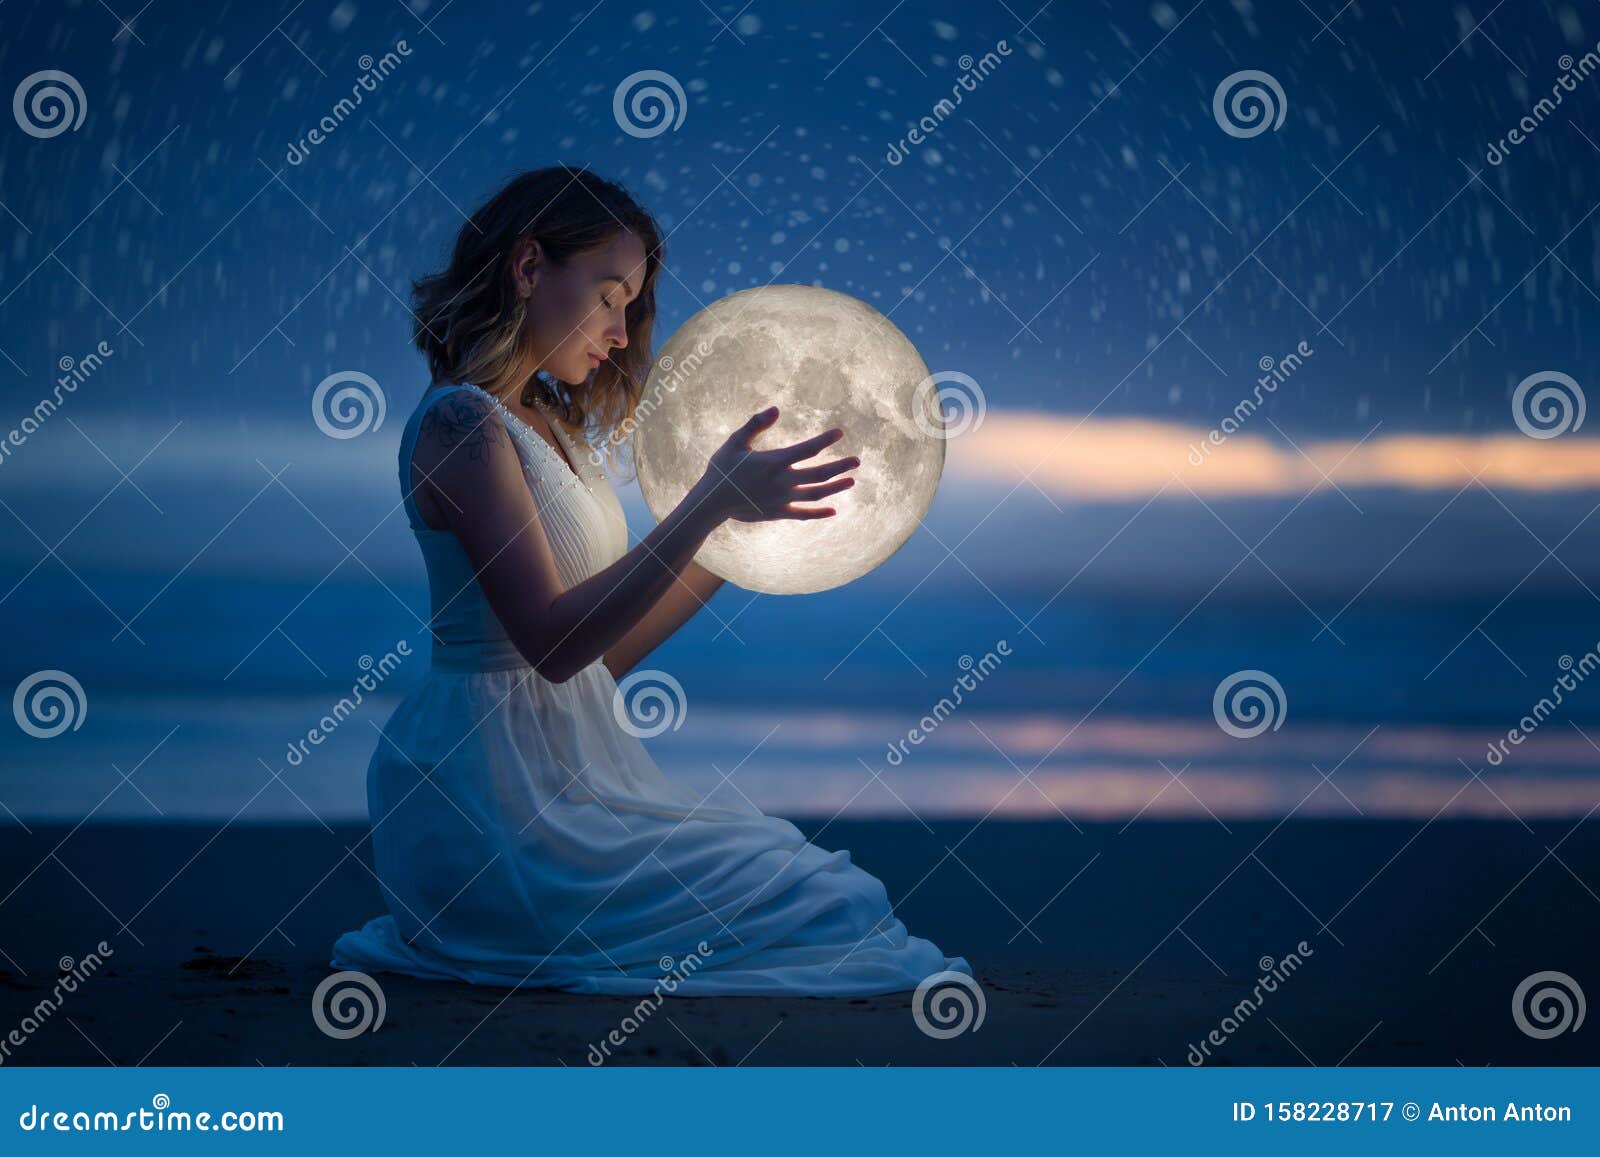 110,525 Beautiful Moon Stock Photos - Free & Royalty-Free Stock ...